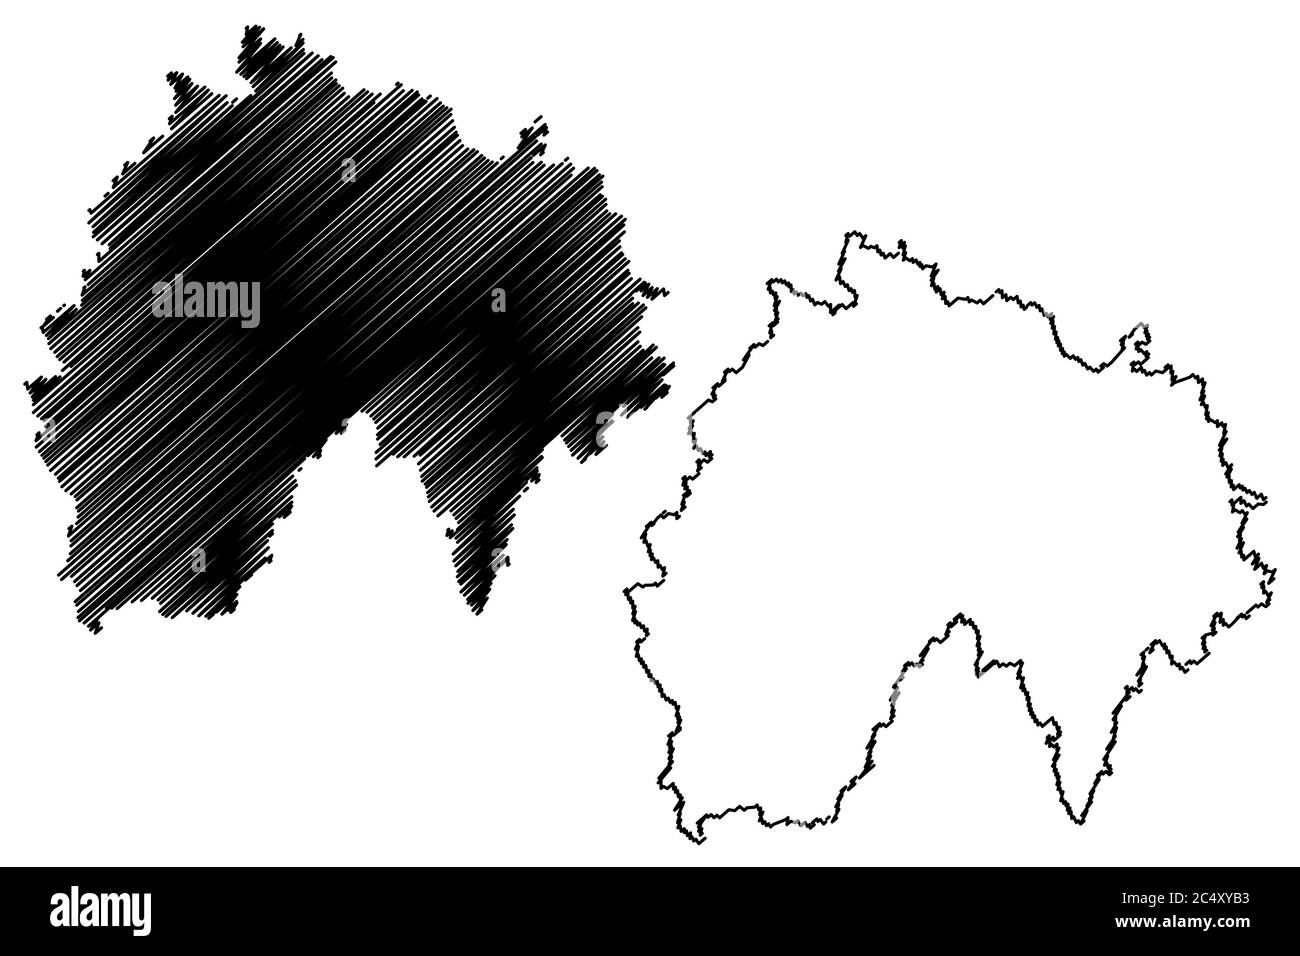 Departamento Cantal (Frankreich, Französische Republik, Region Auvergne-Rhone-Alpes, ARA) Karte Vektorgrafik, Skizze kritzelnCantal Karte Stock Vektor